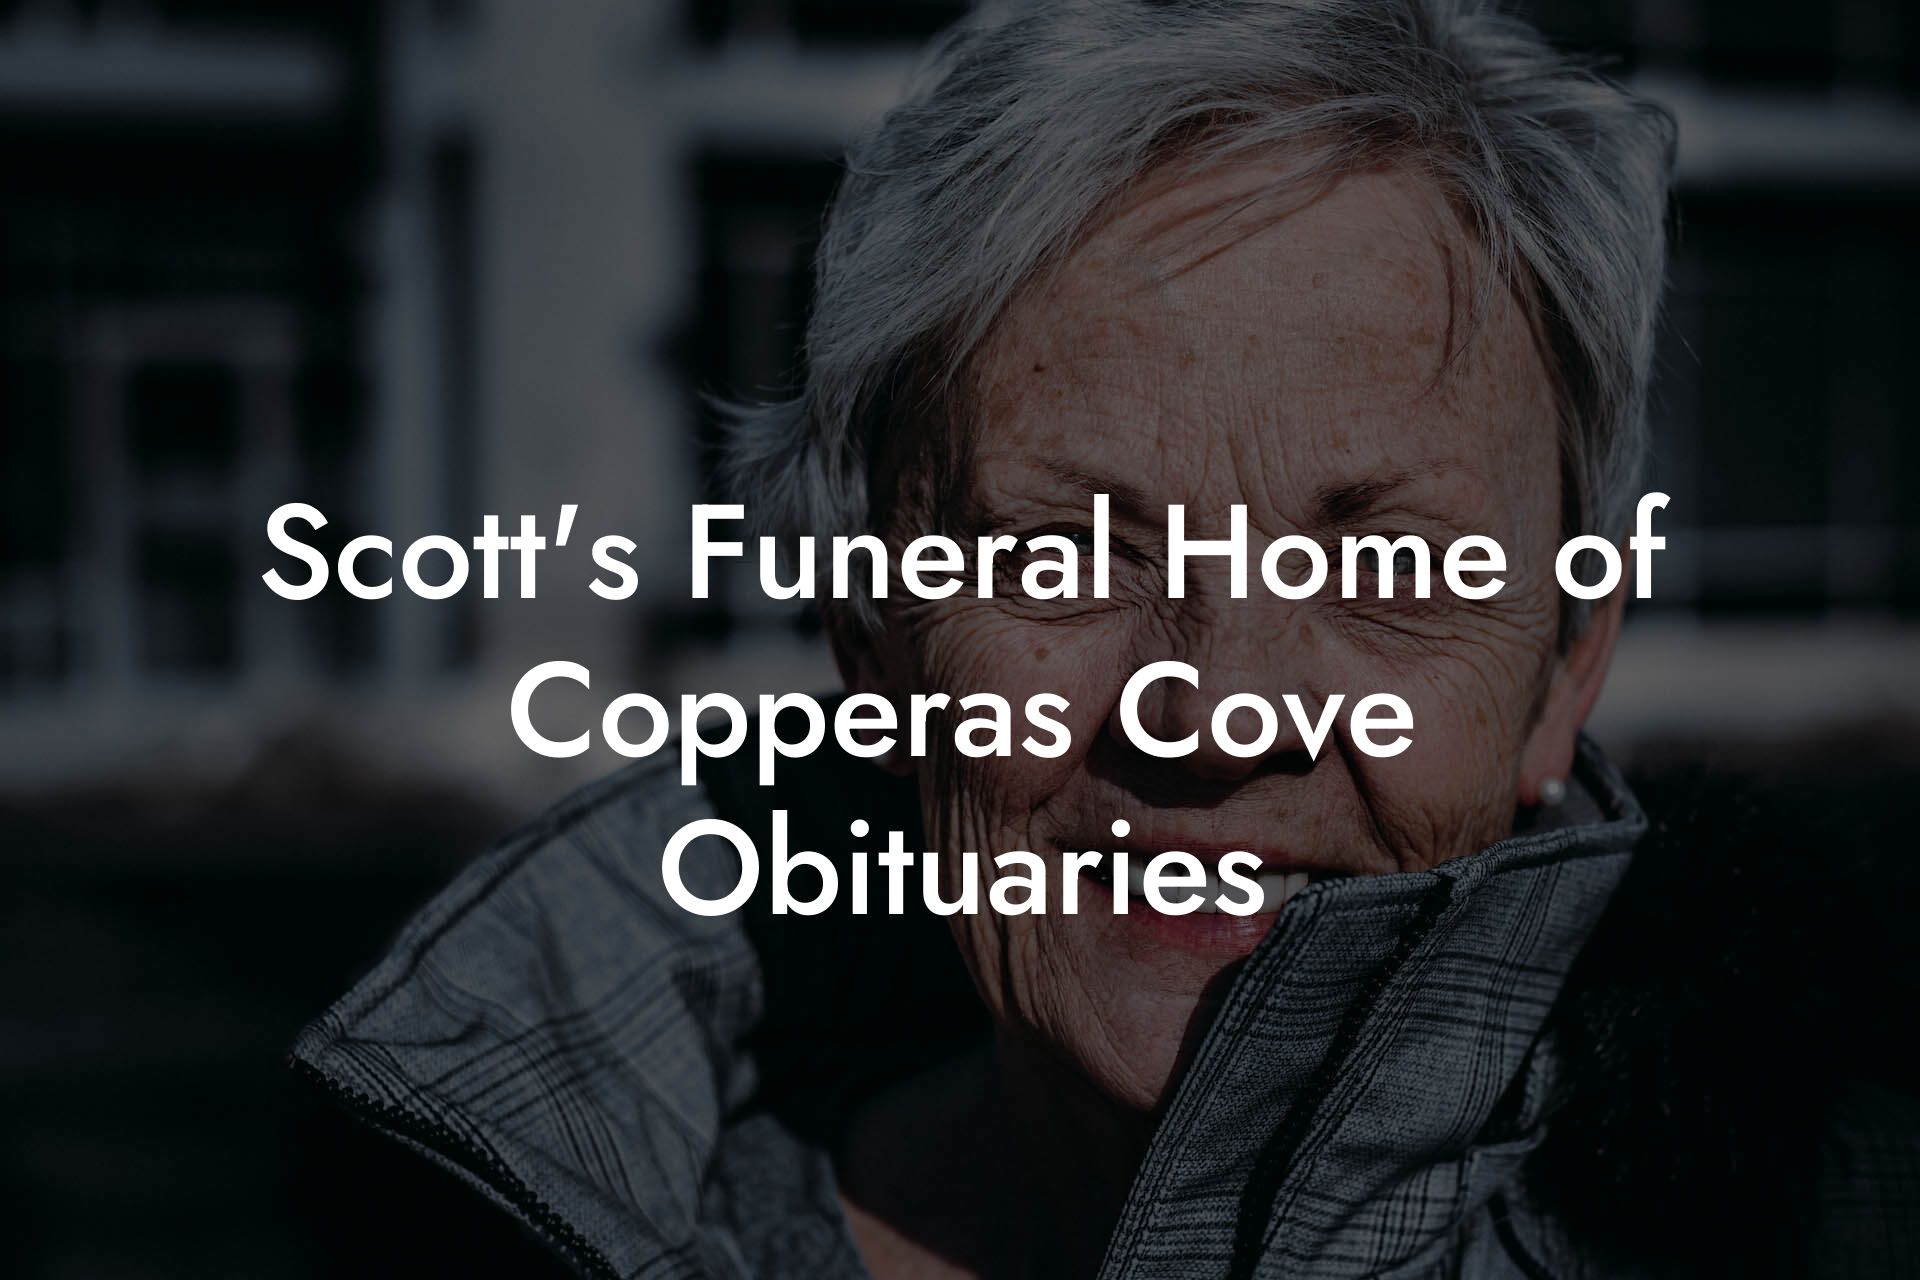 Scott's Funeral Home of Copperas Cove Obituaries